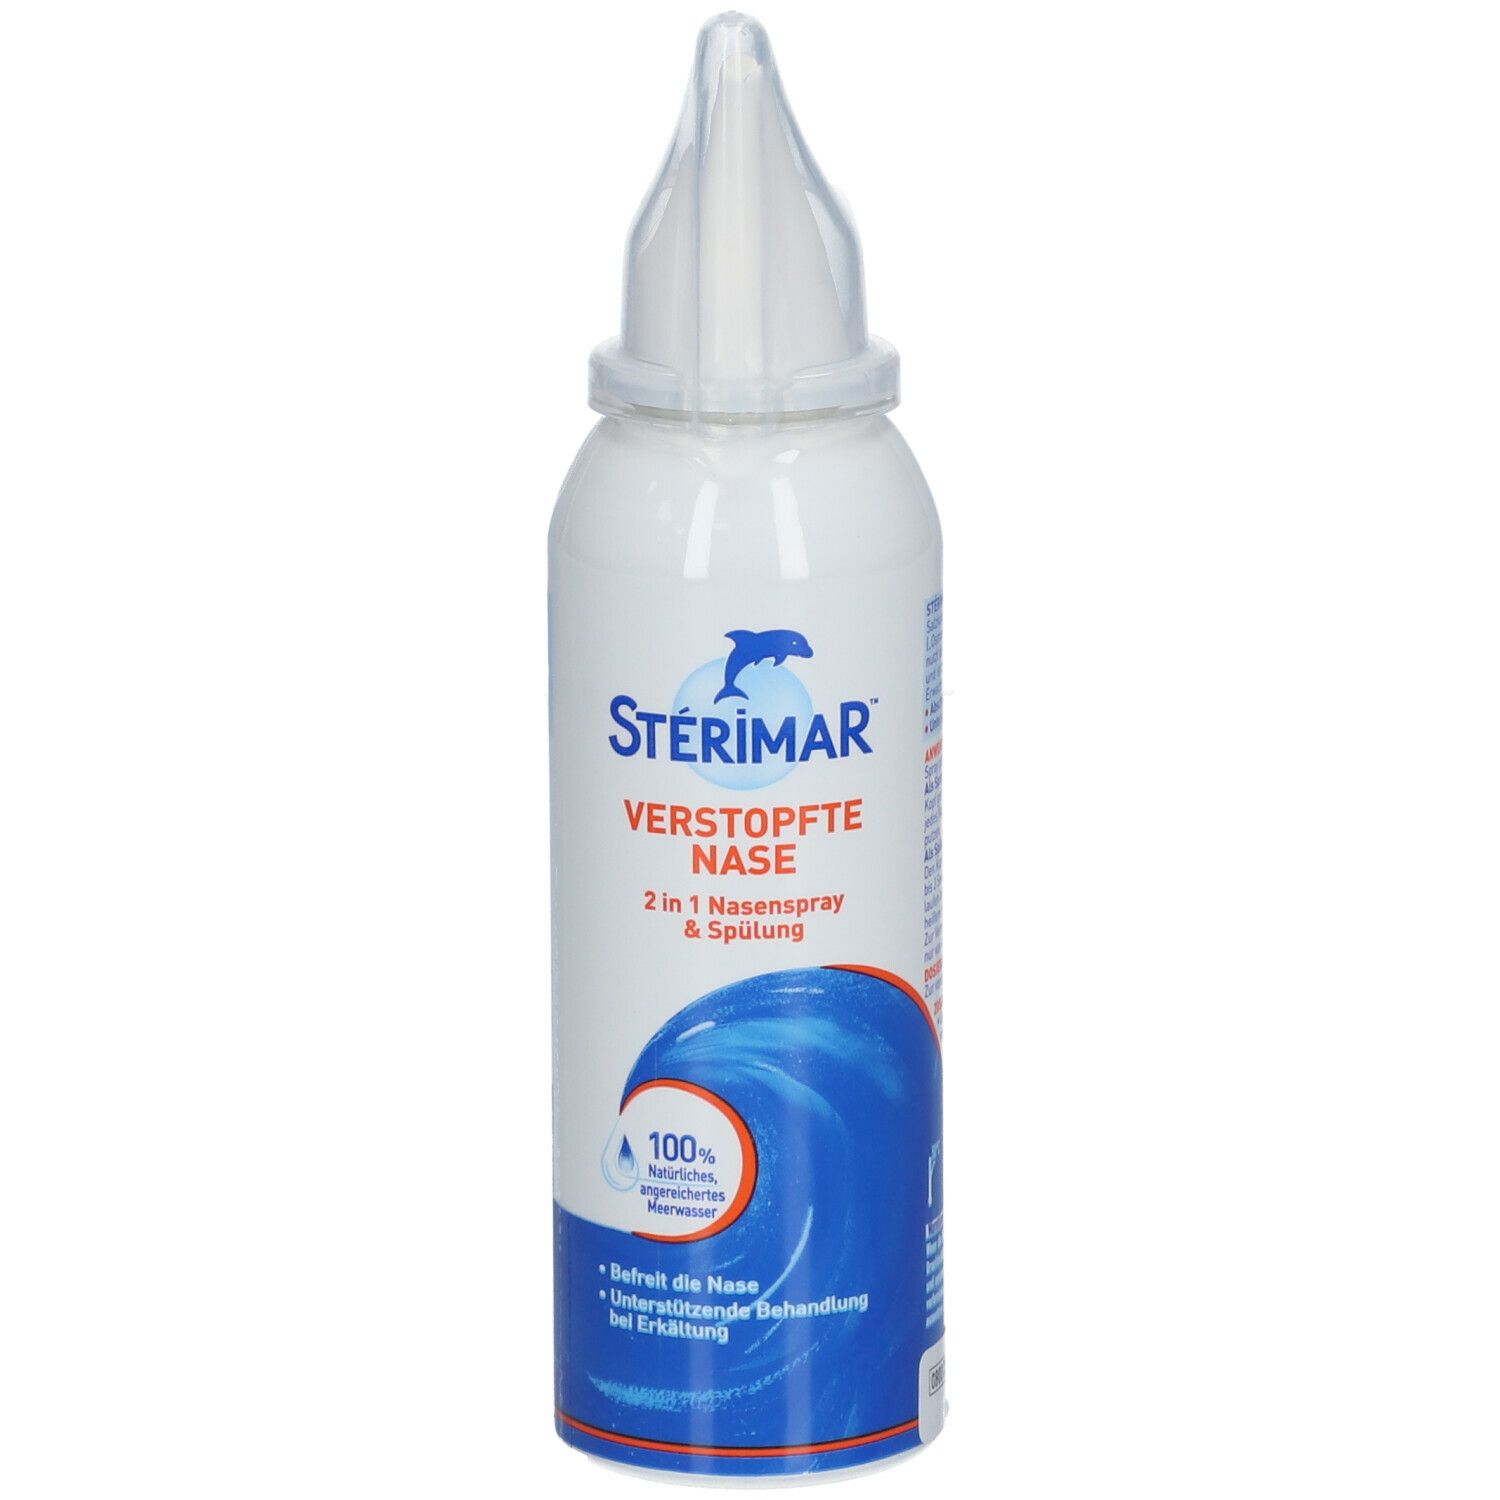 STERIMAR® Verstopfte Nase 2in1 Nasenspray & Spülung